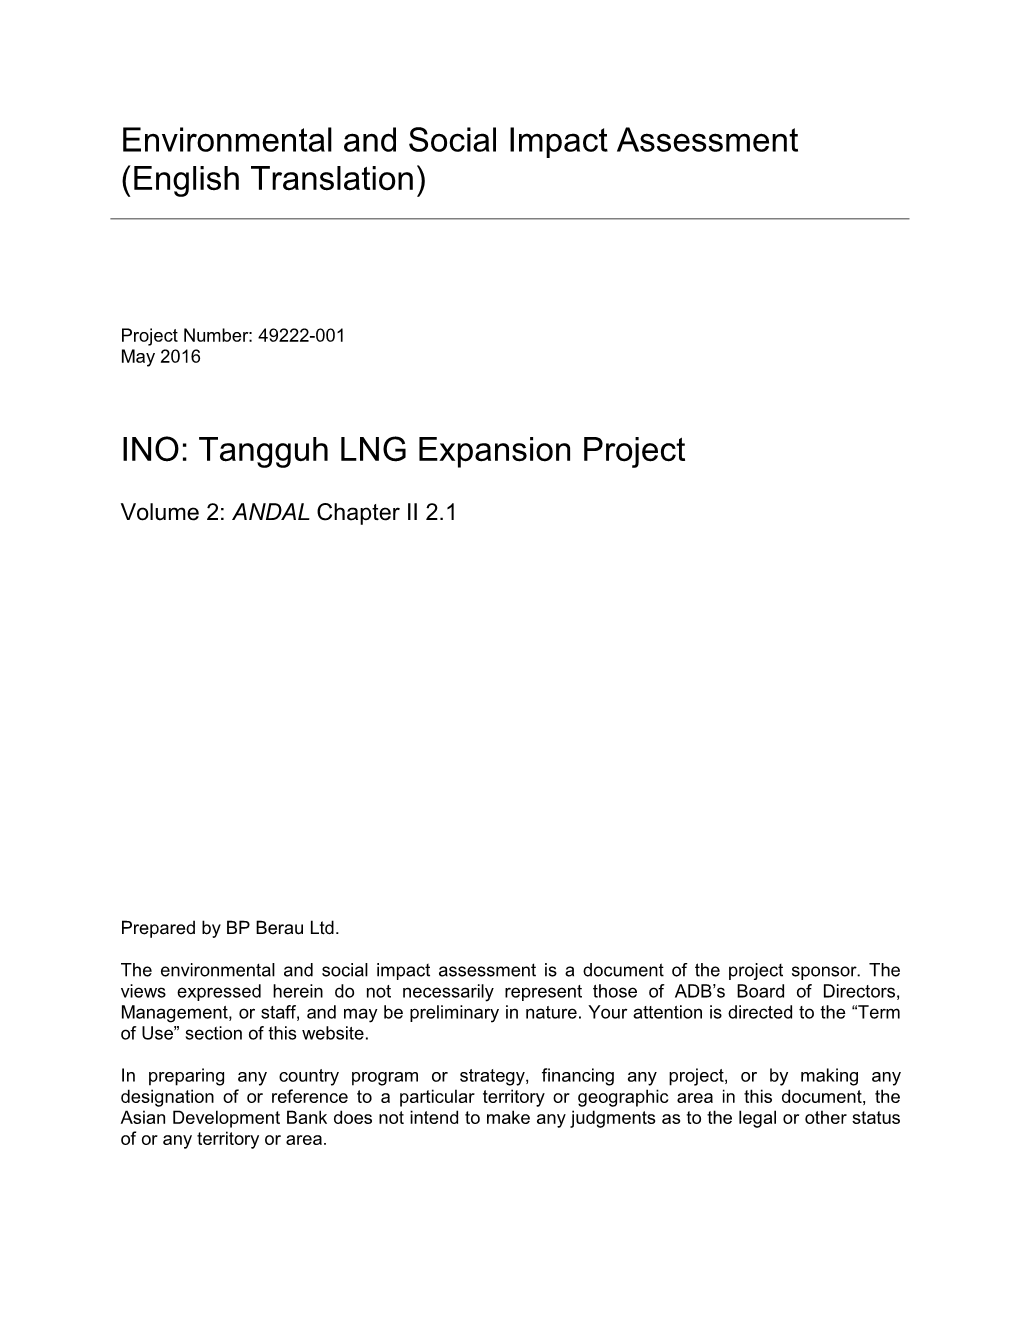 INO: Tangguh LNG Expansion Project